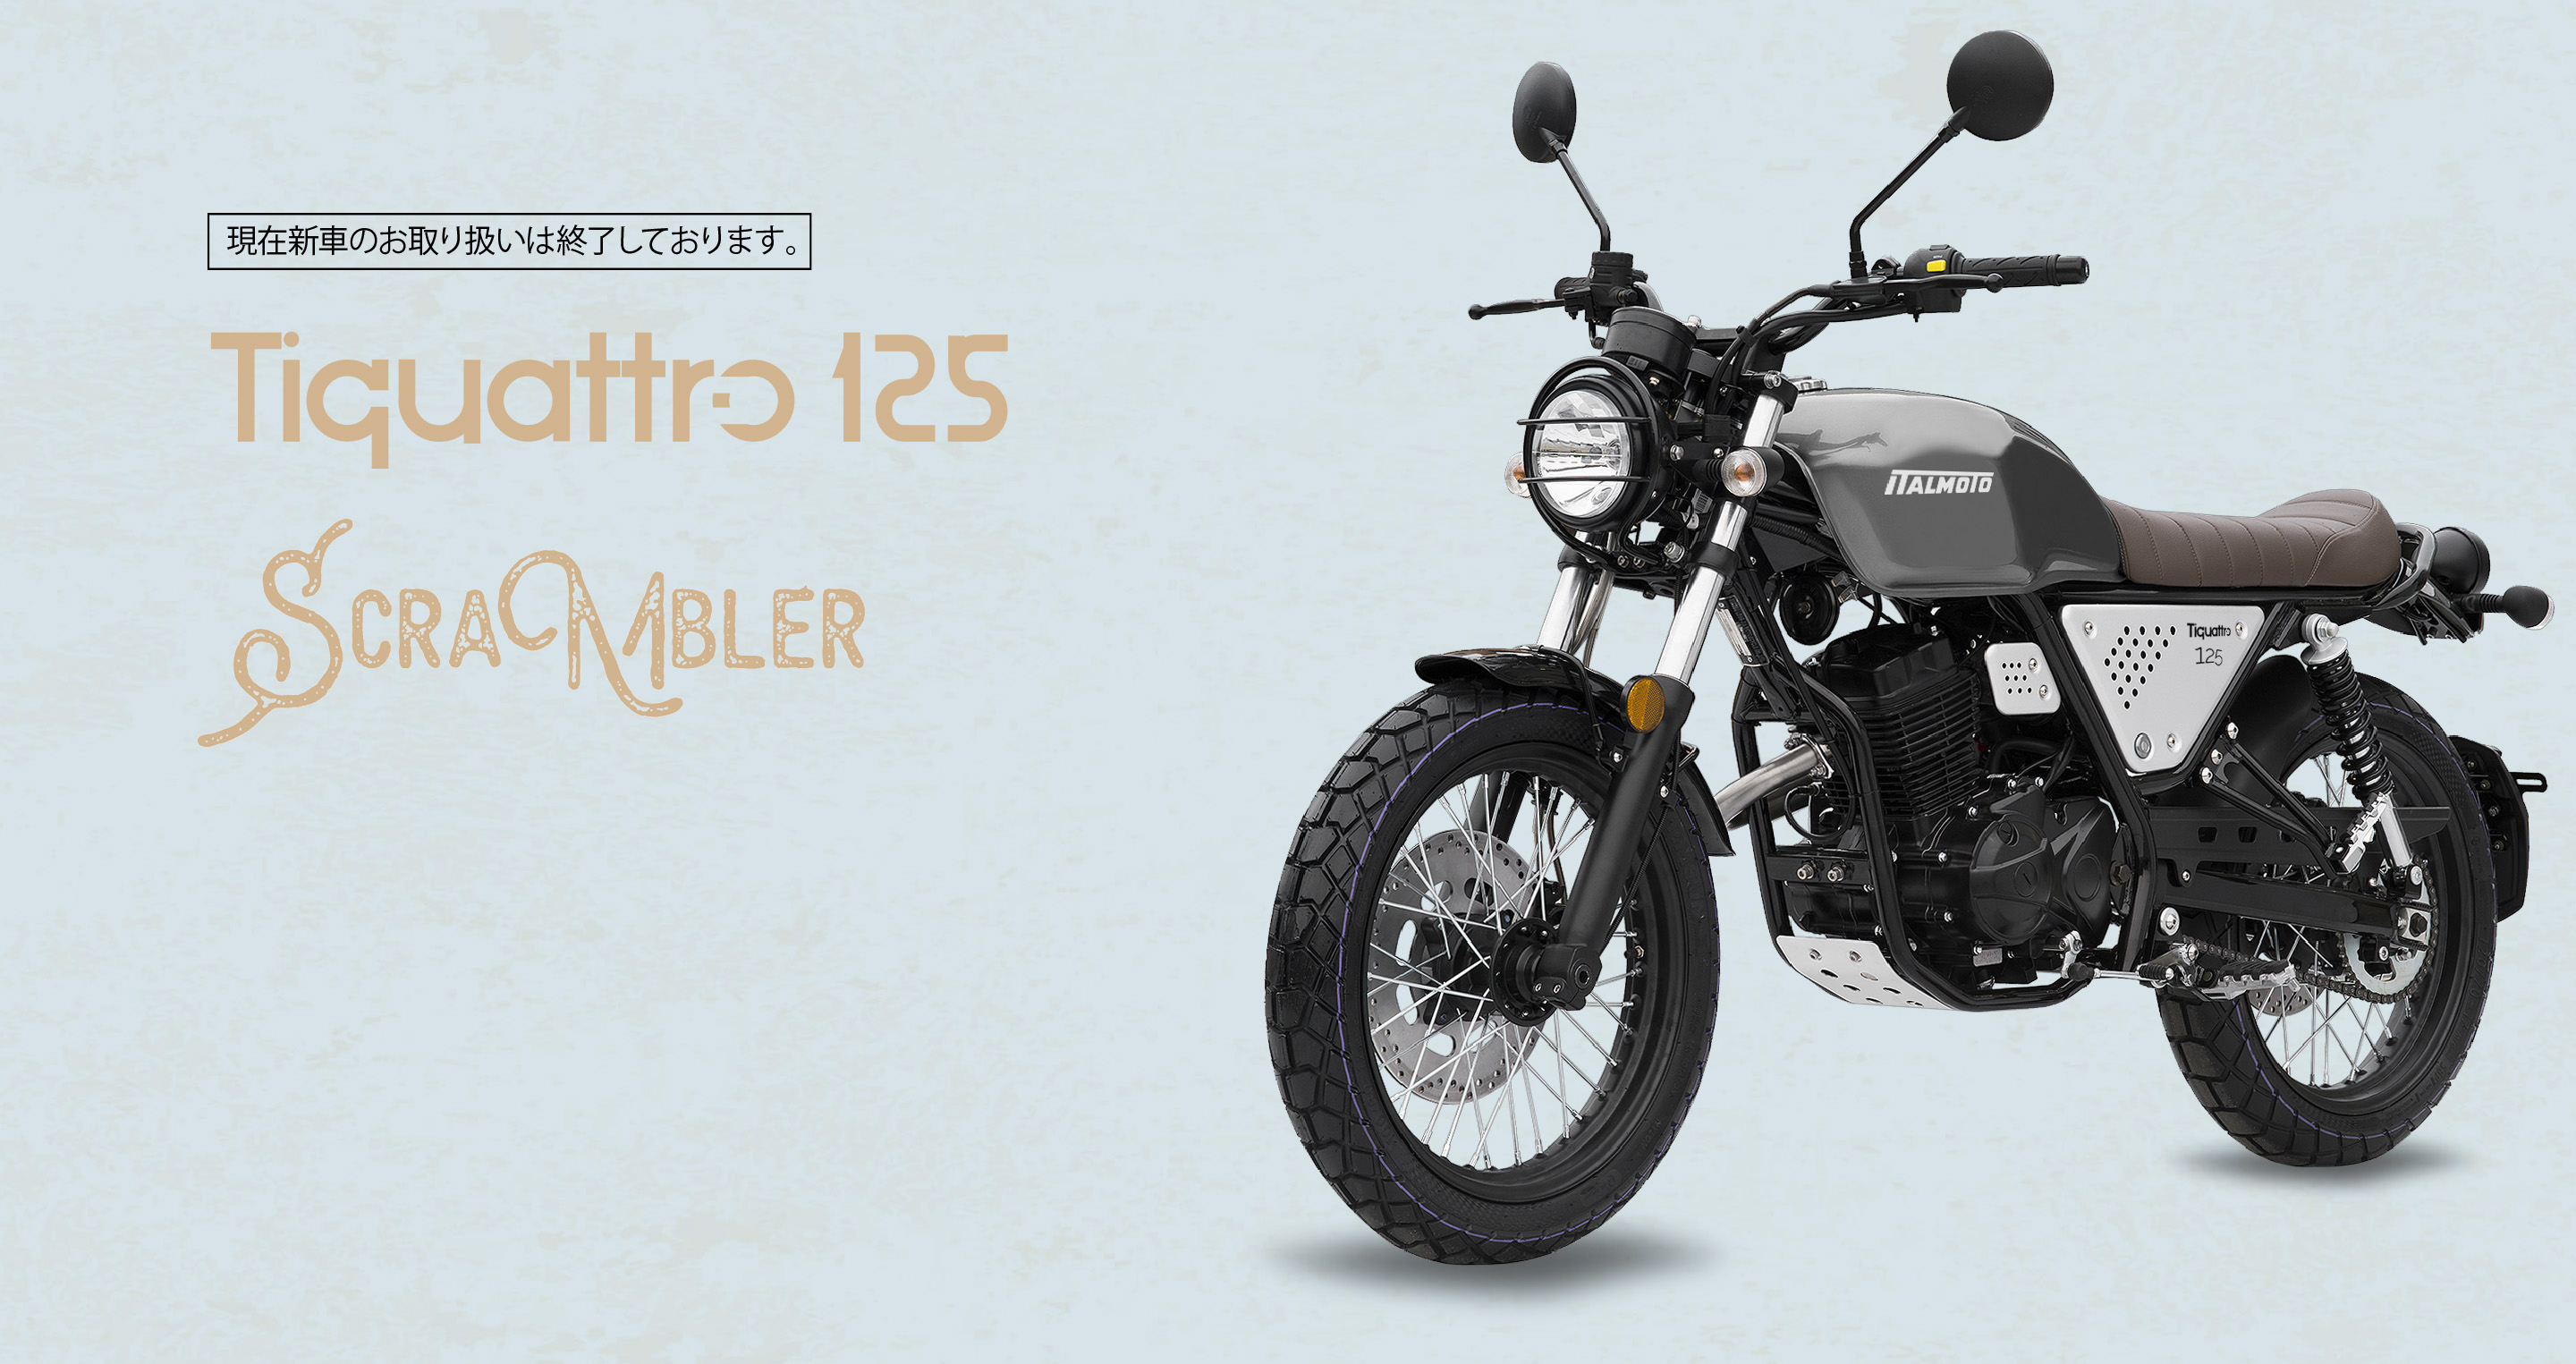 Tiquattro 125cc Scrambler